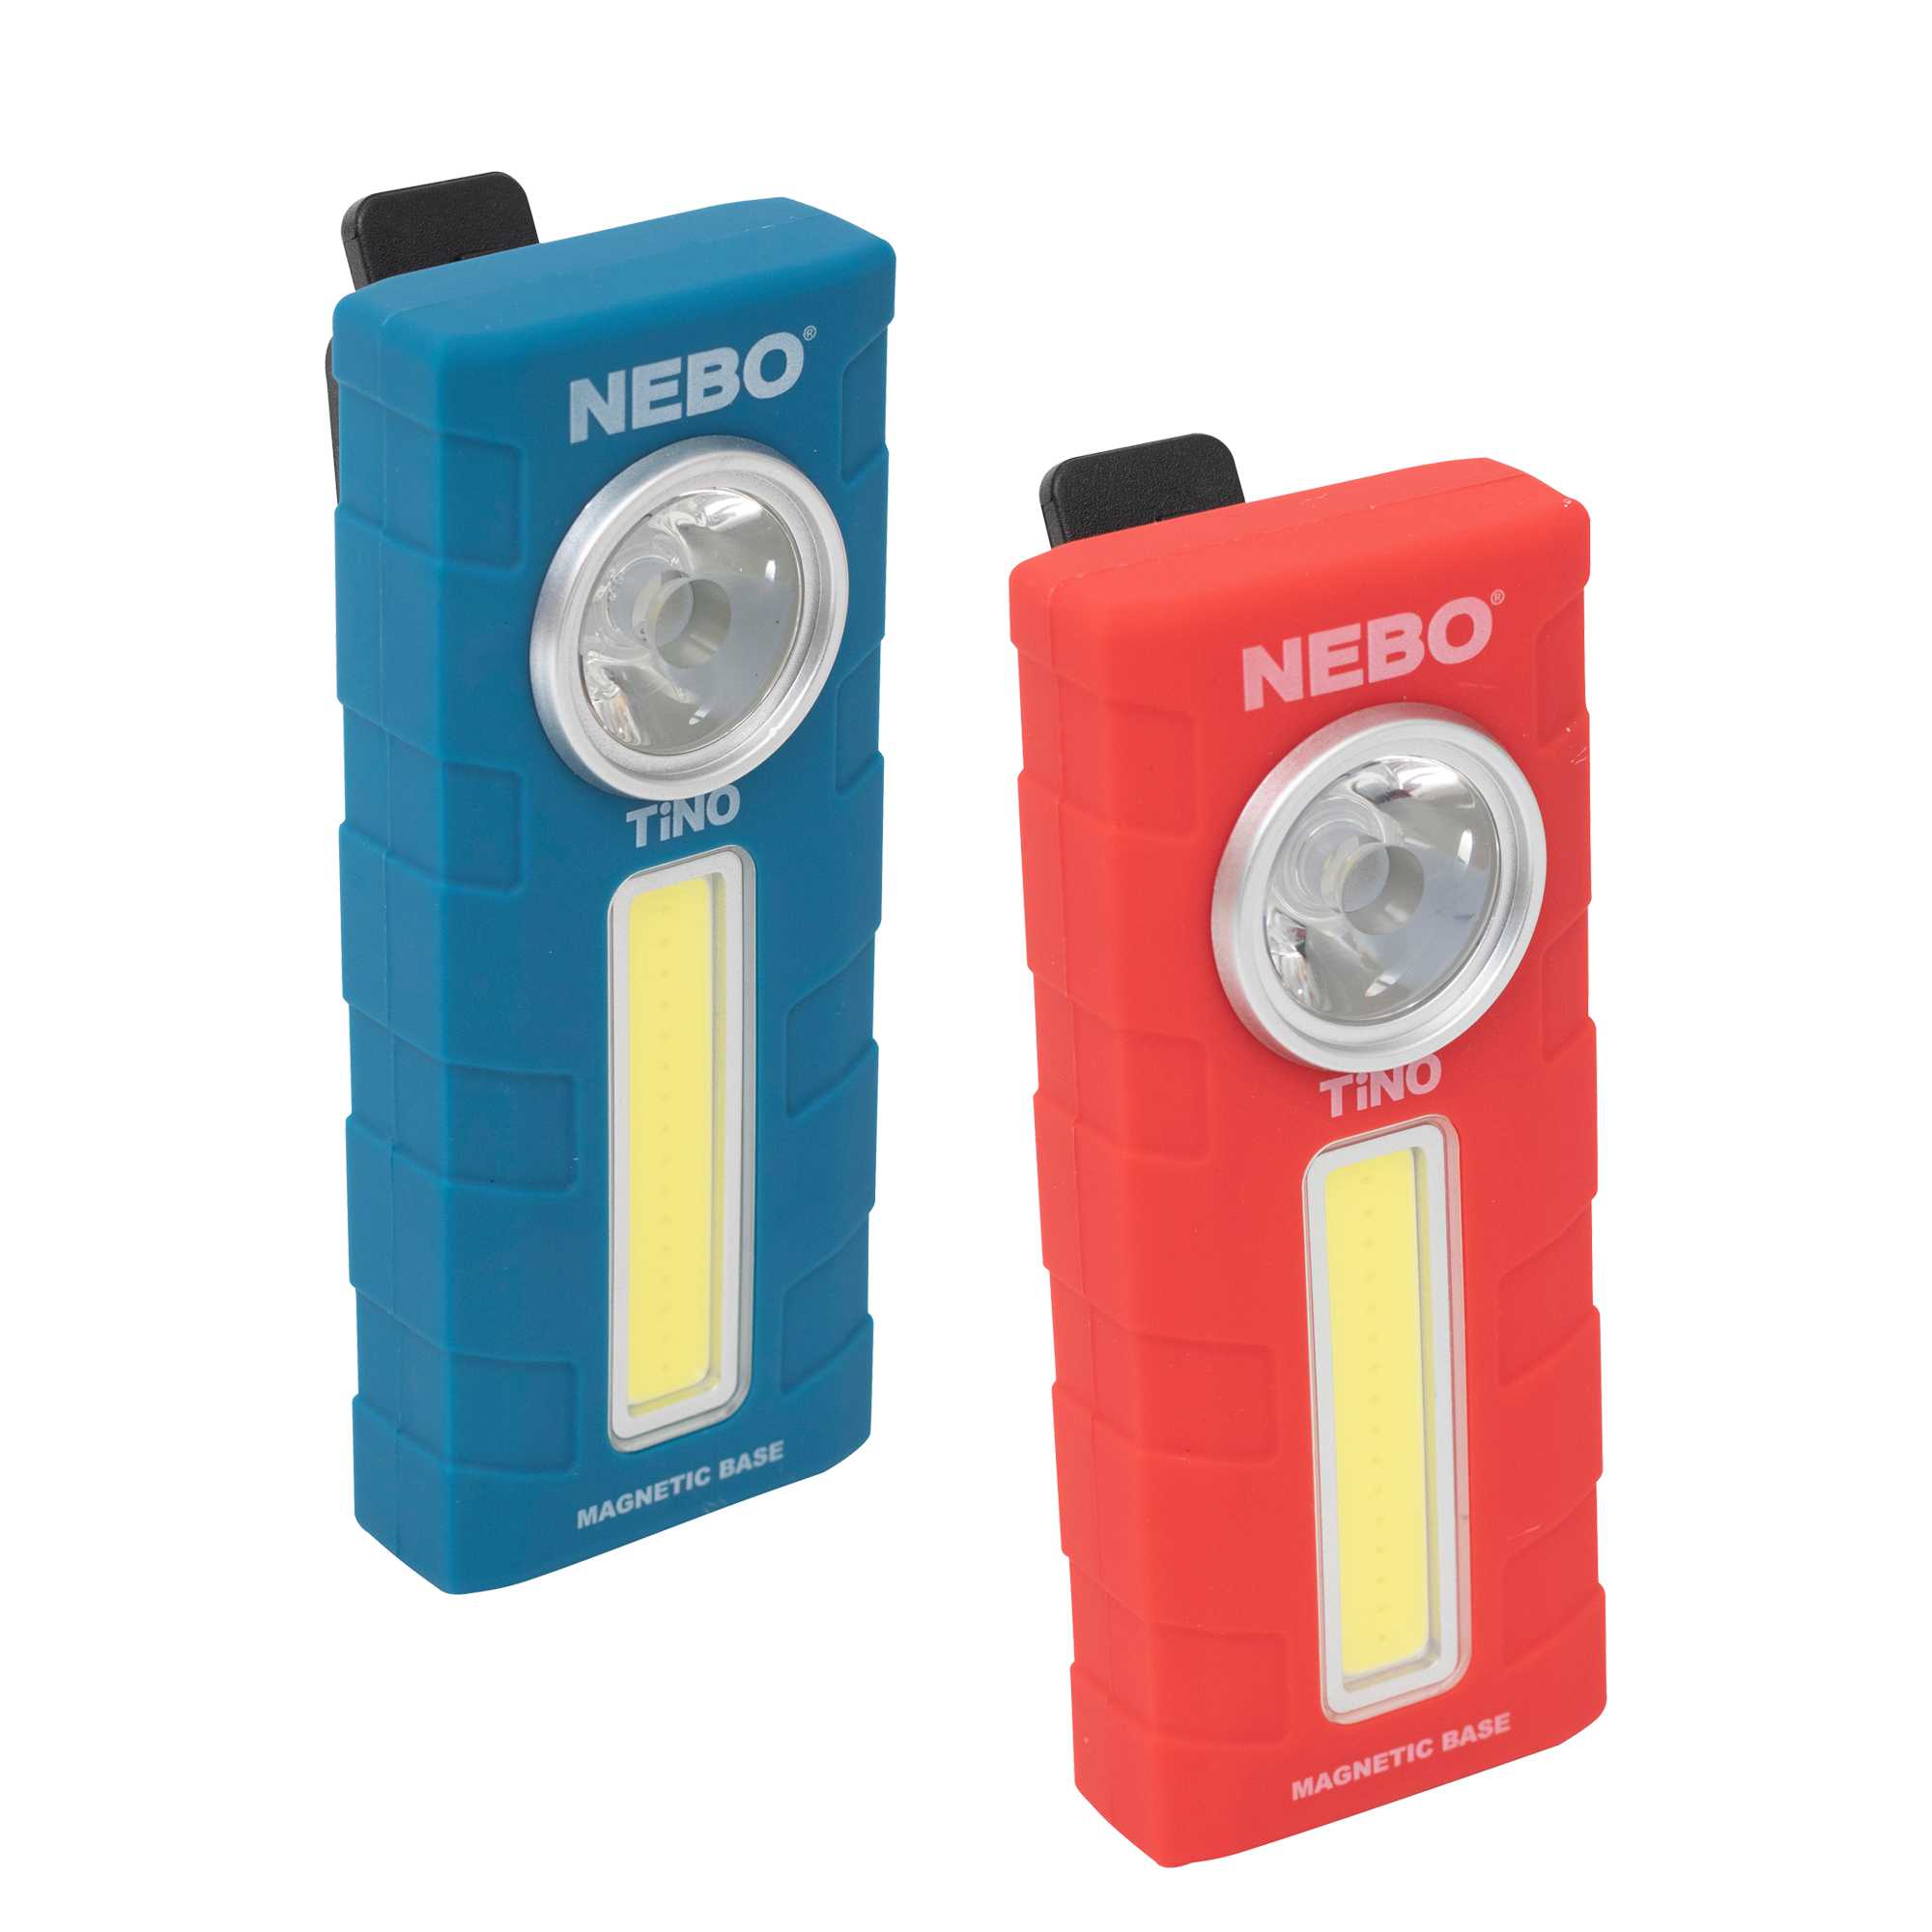 Linterna NEBO TINO Slim Pocket 2 en 1